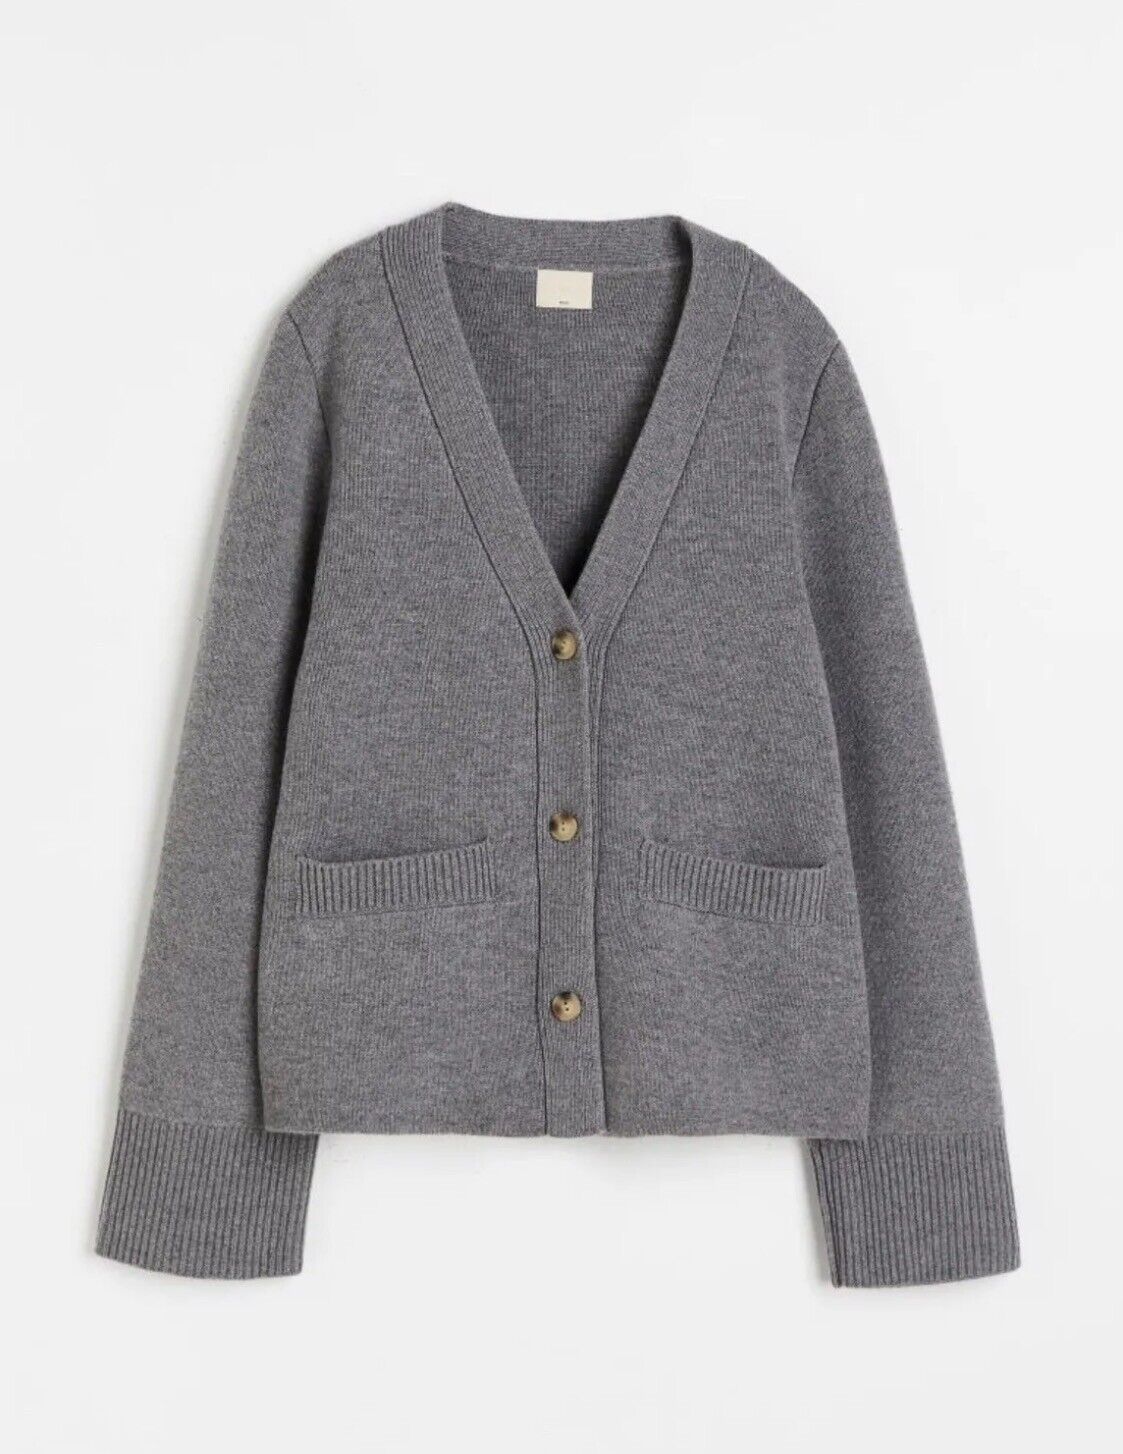 H&M Premium Grey Wool Khaite Cardigan, Size L, Influencer Favourite, Sold Out | eBay UK